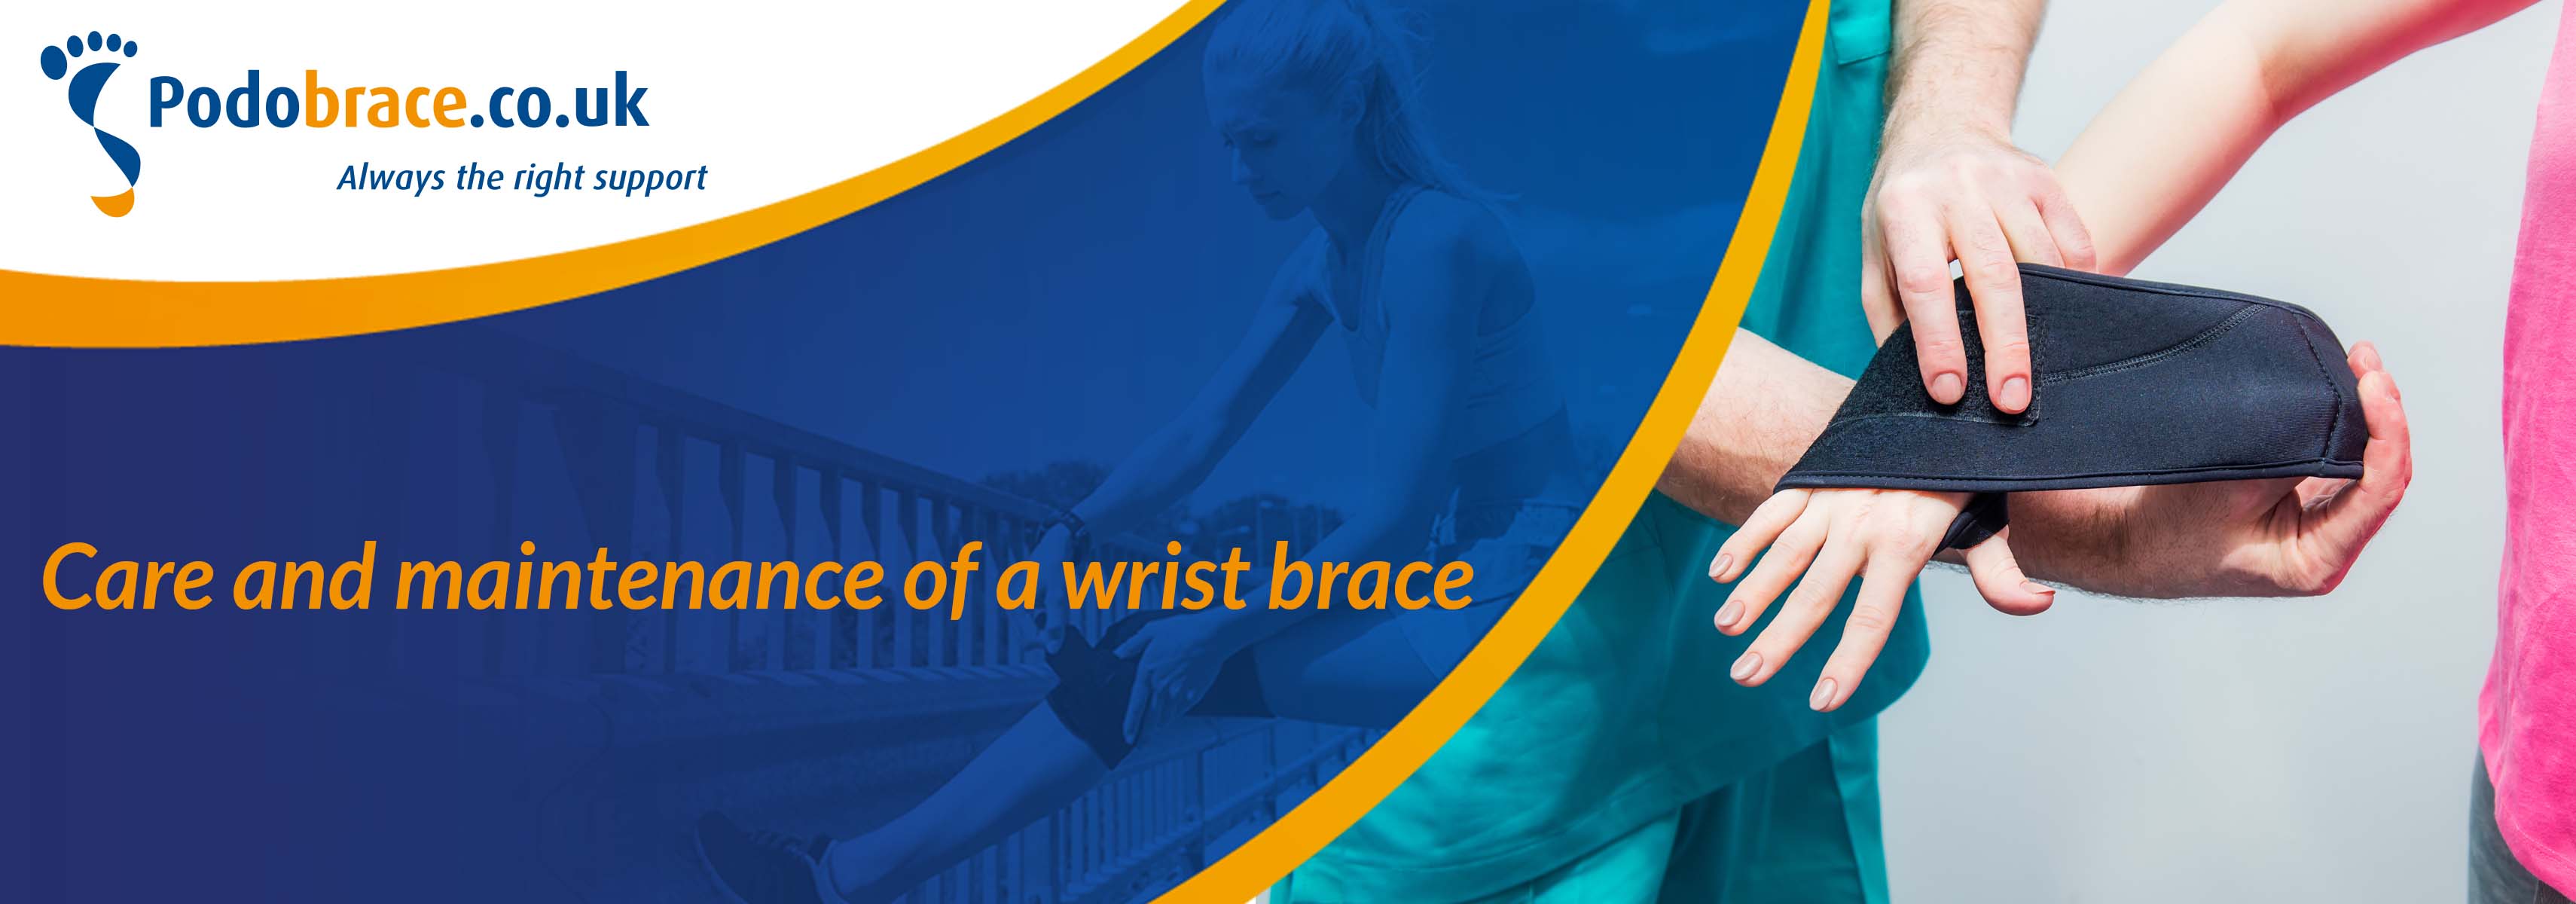 care and maintenance of a wrist brace